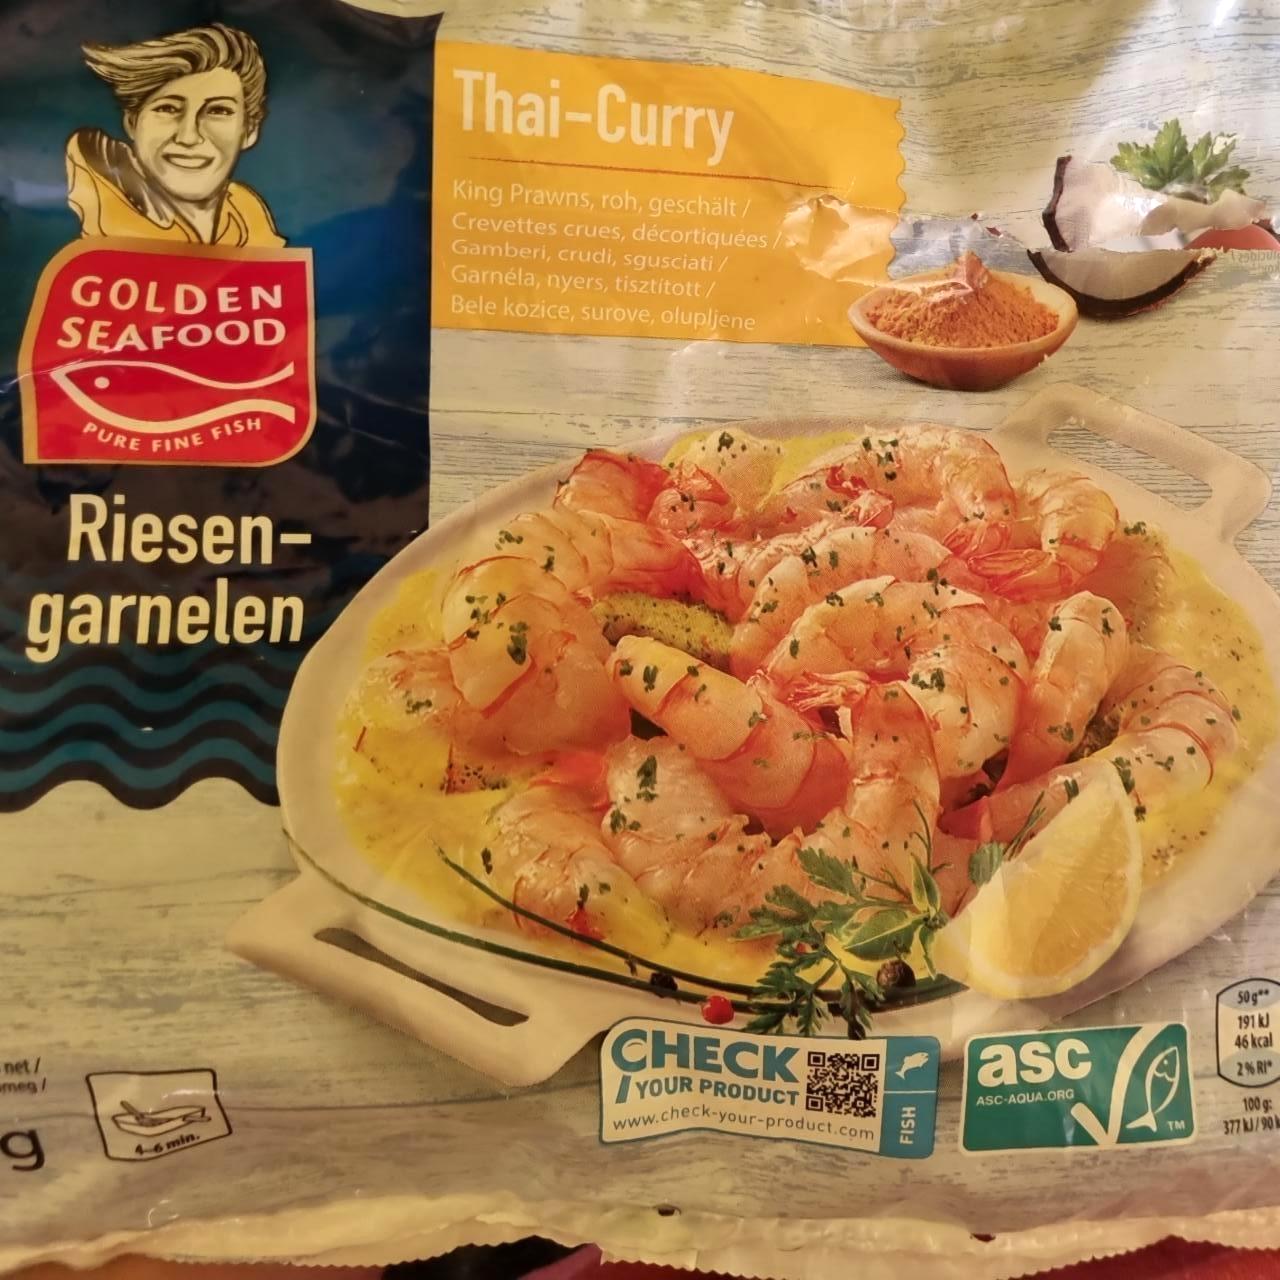 Képek - Thai-curry rák Golden seafood